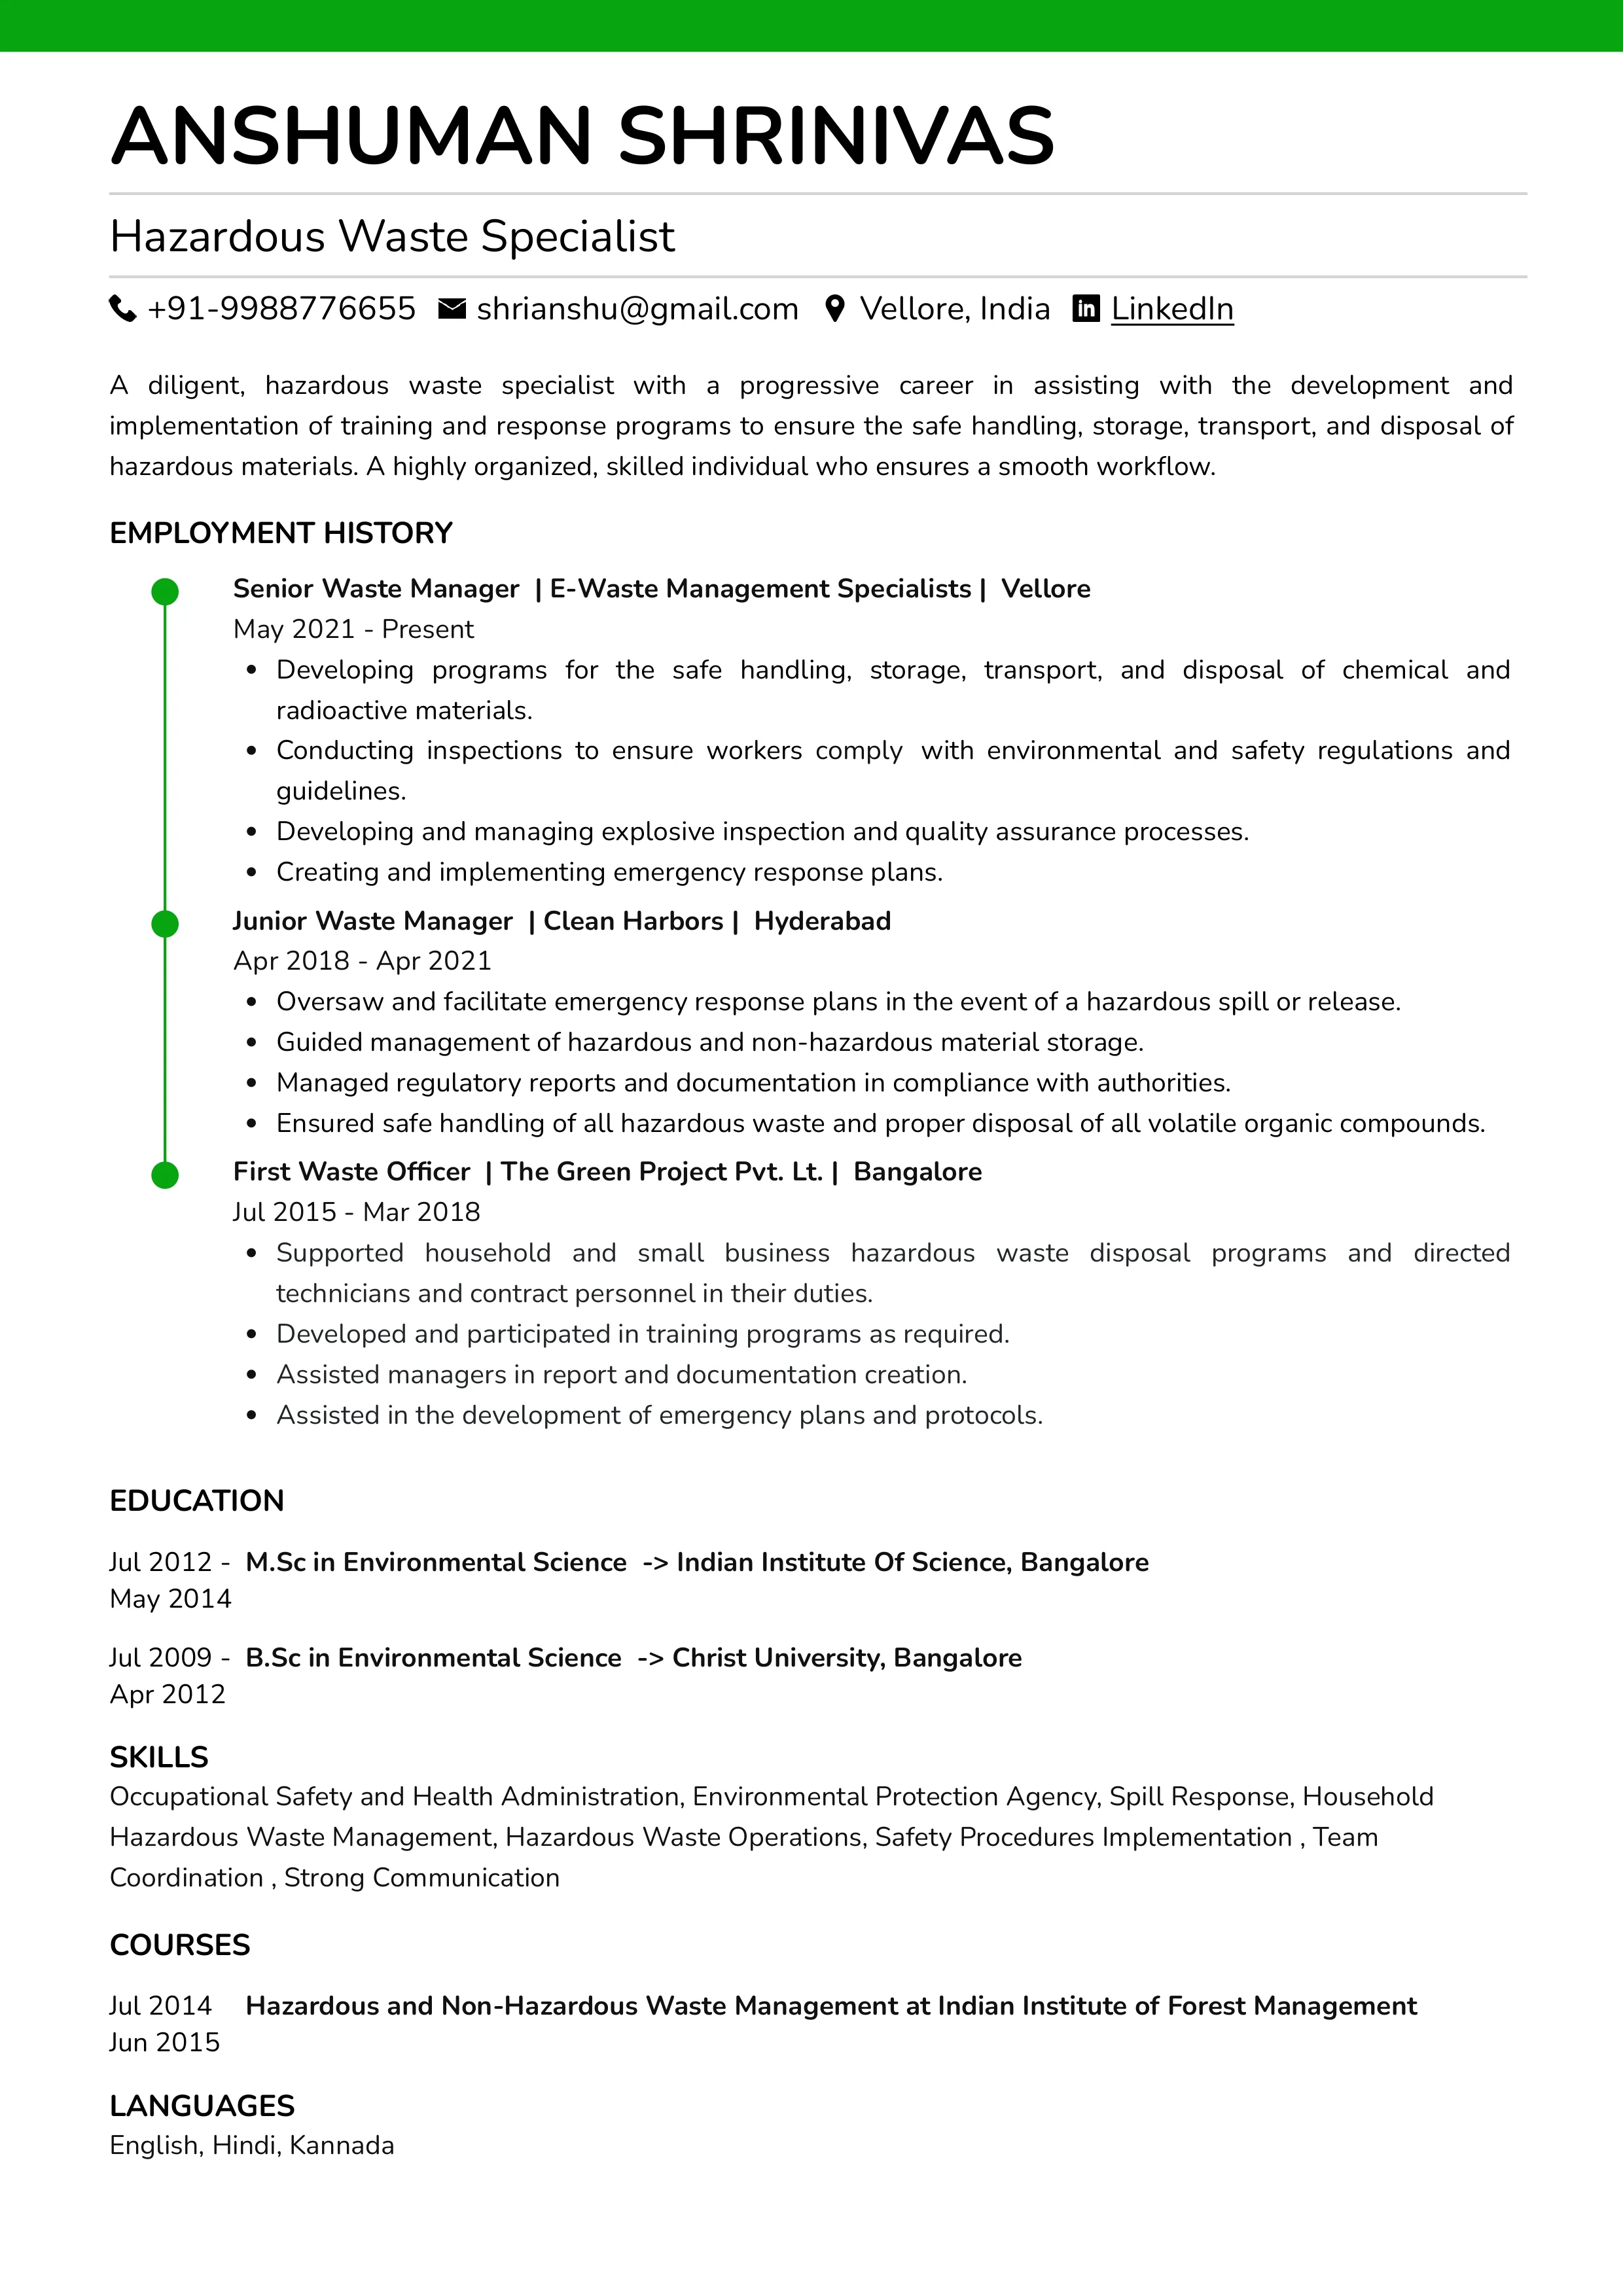 Sample Resume of Hazardous Waste Specialist | Free Resume Templates & Samples on Resumod.co